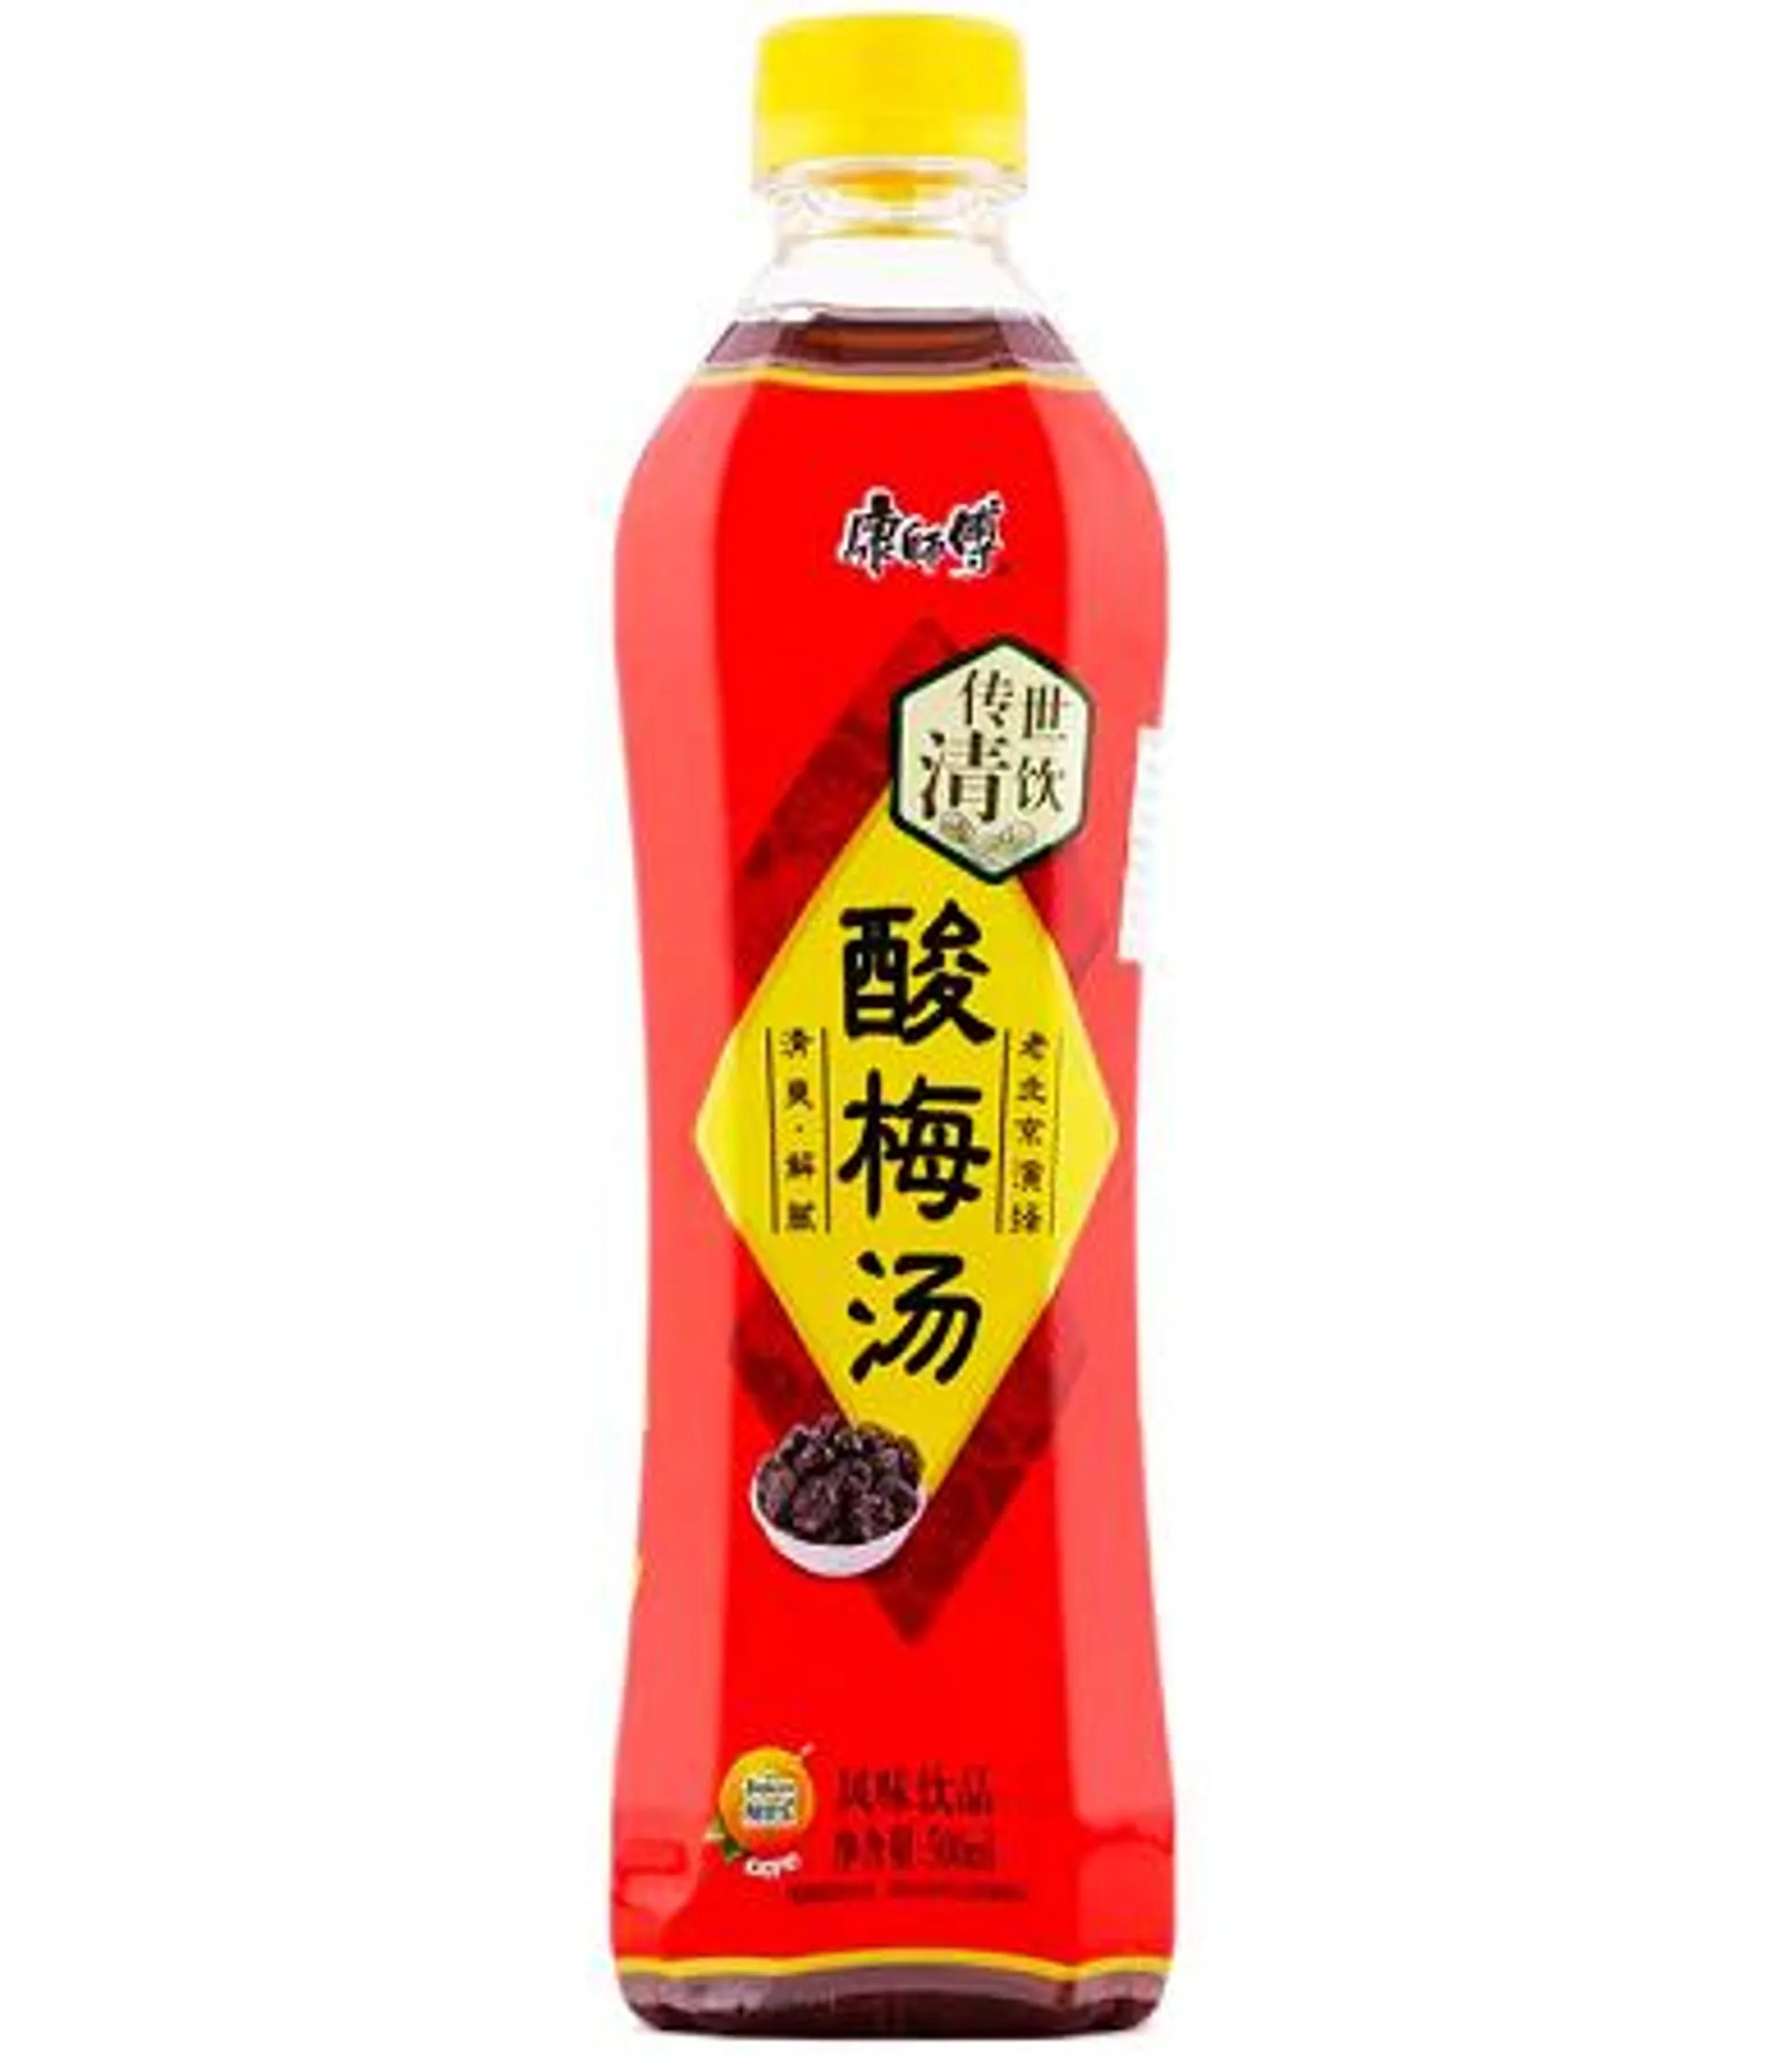 MasterKong sour plum juice drink - 500ml